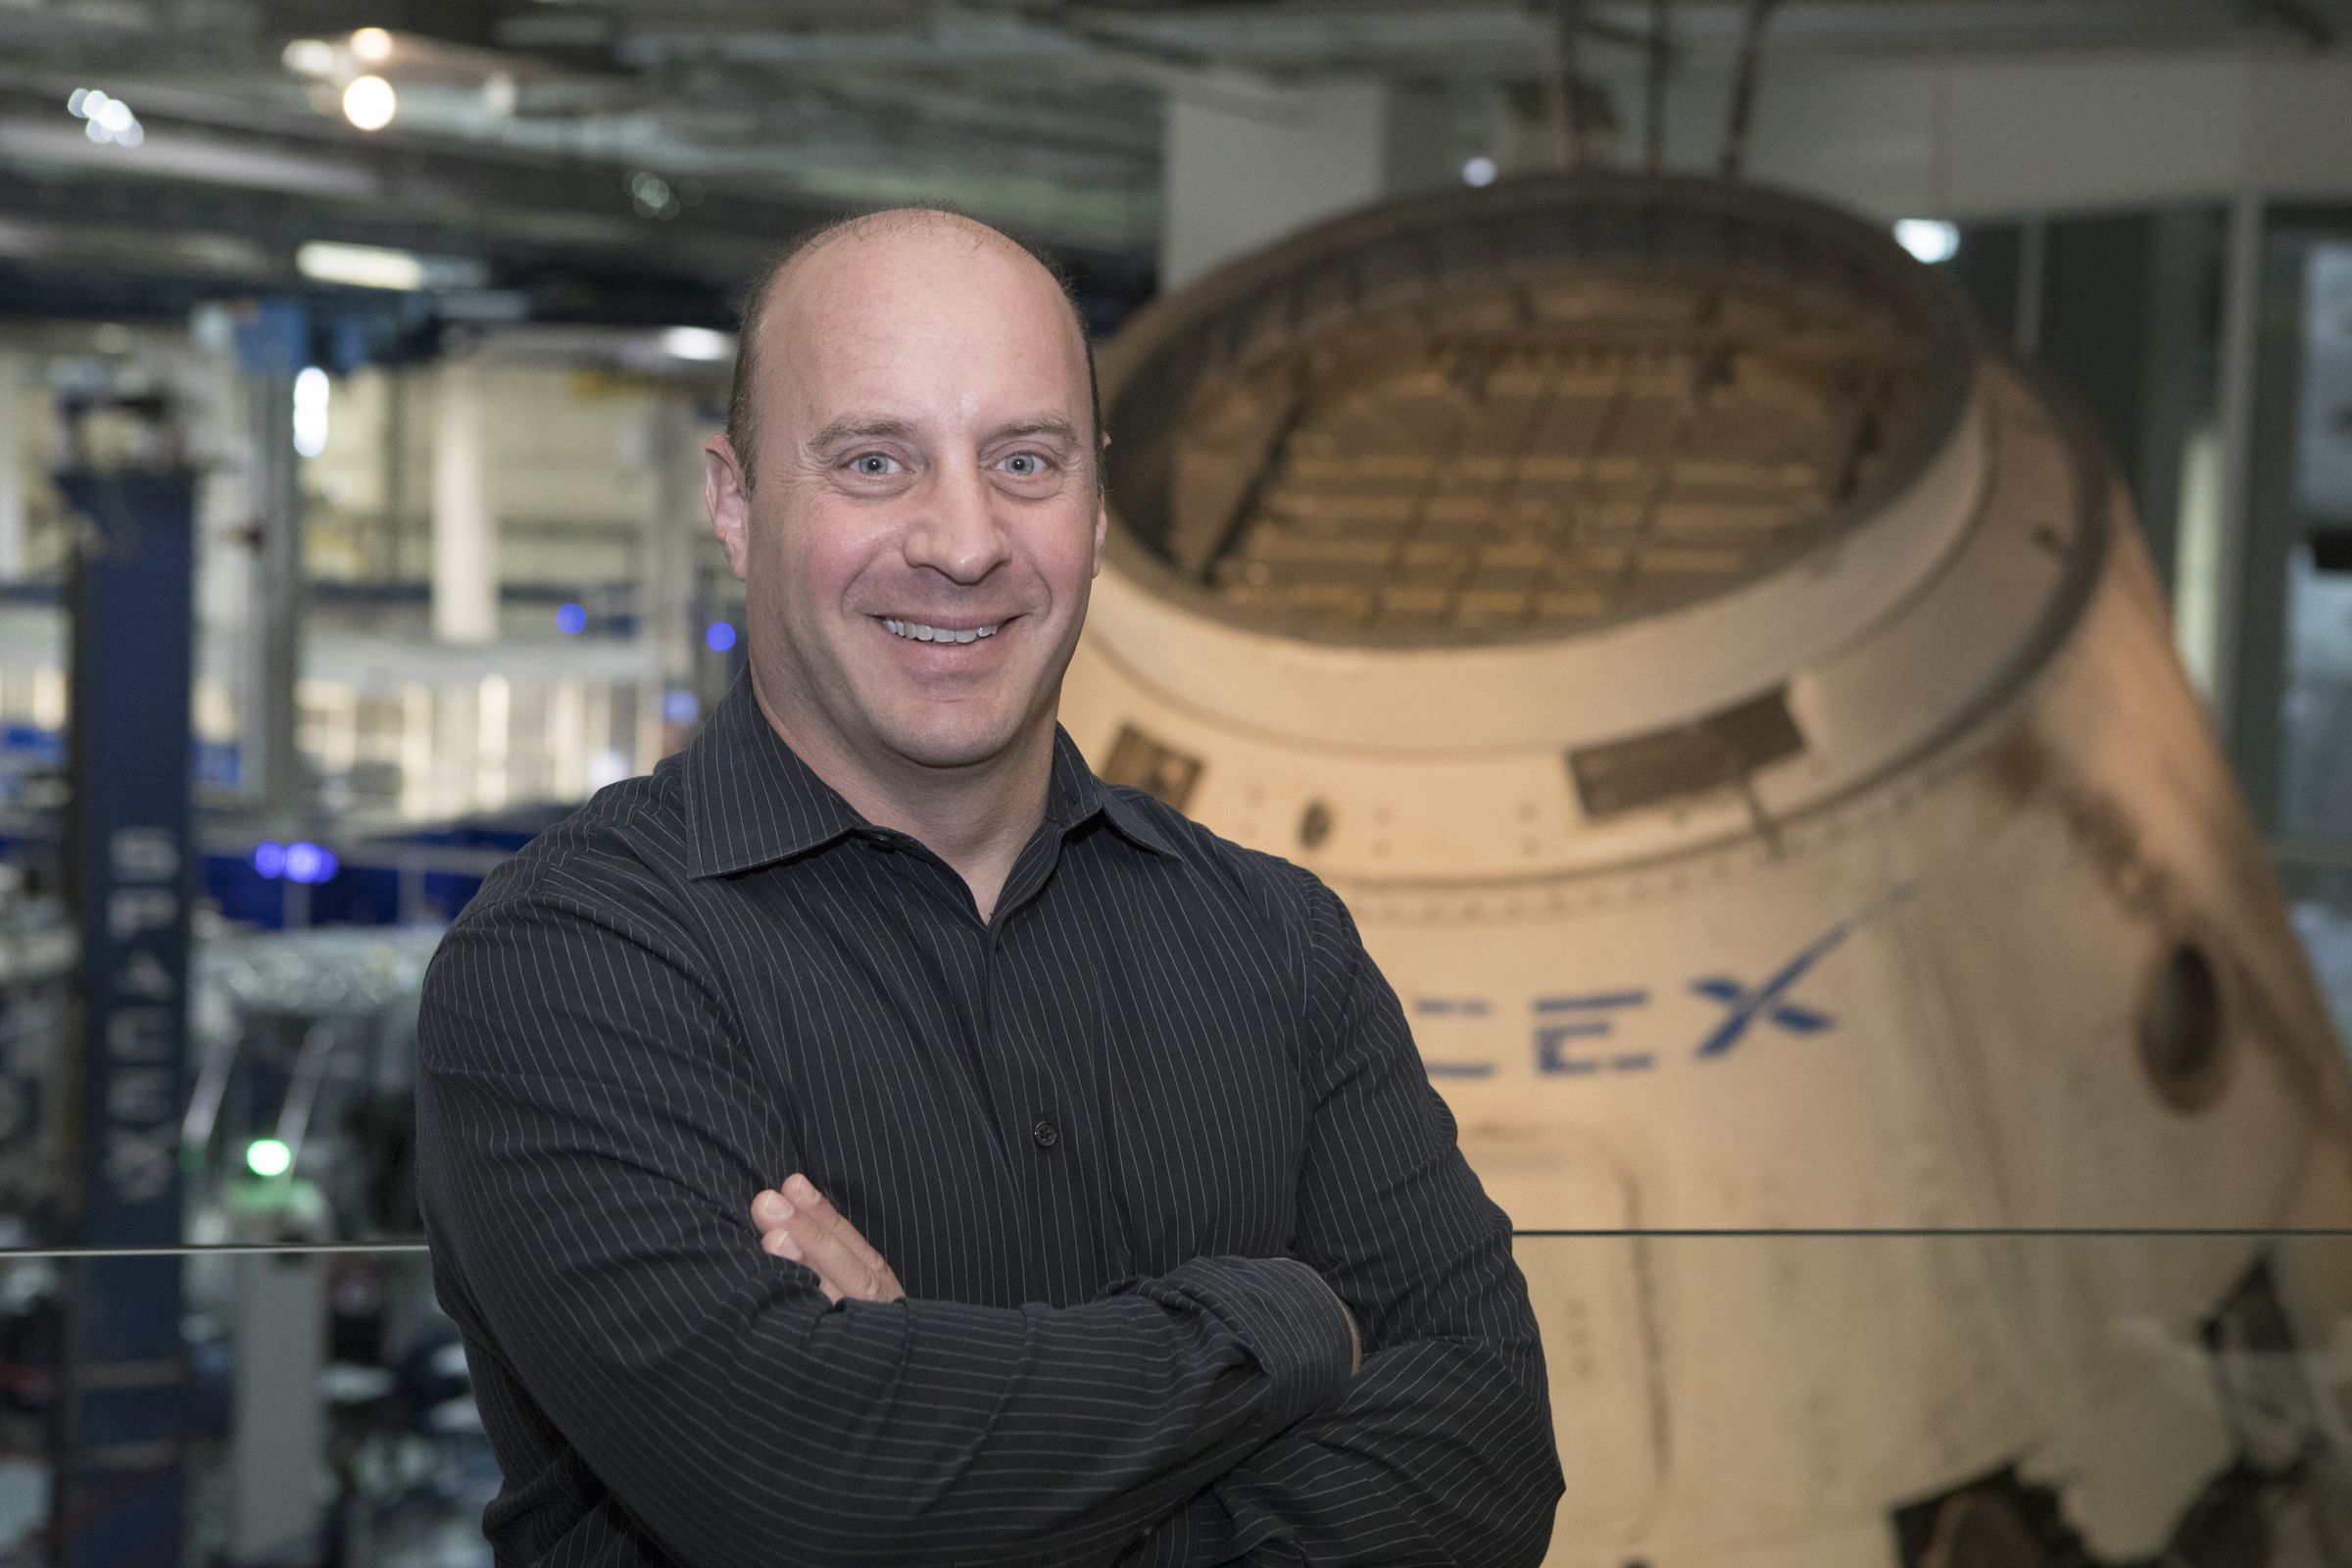 Reisman at SpaceX’s headquarters in Hawthorne, California